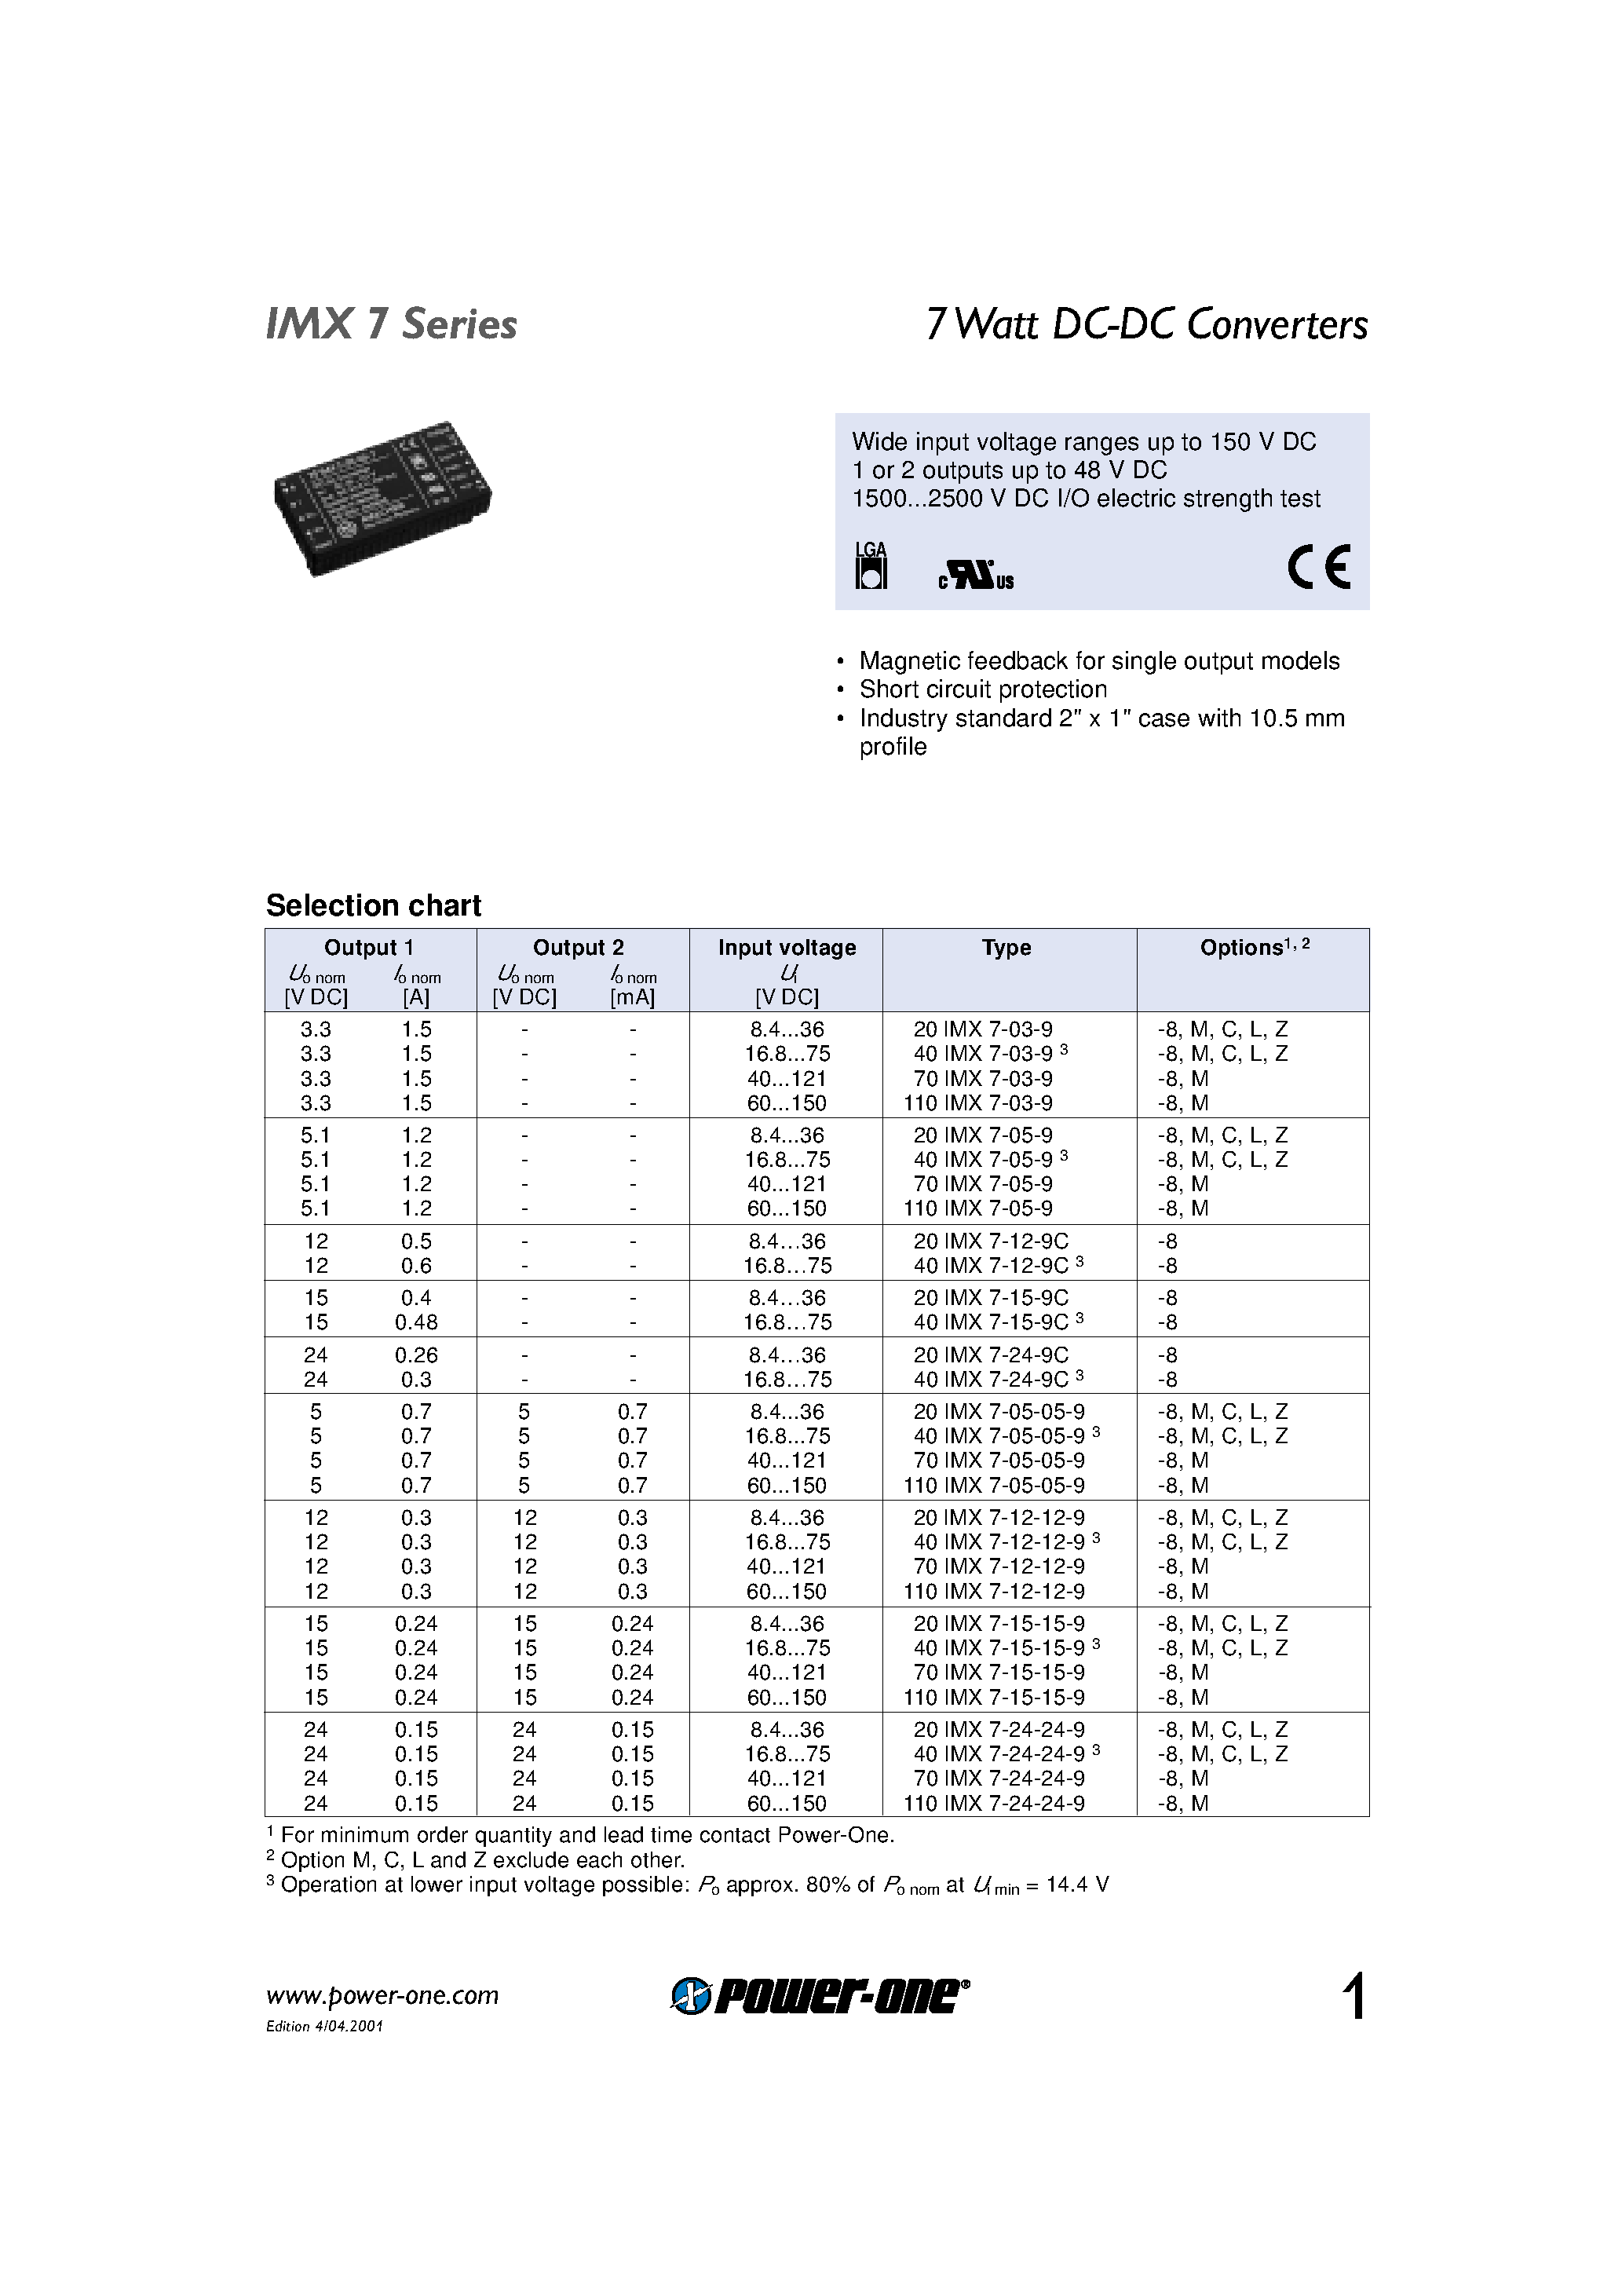 Datasheet 40IMX7-15-15-9 - 7 Watt DC-DC Converters page 1